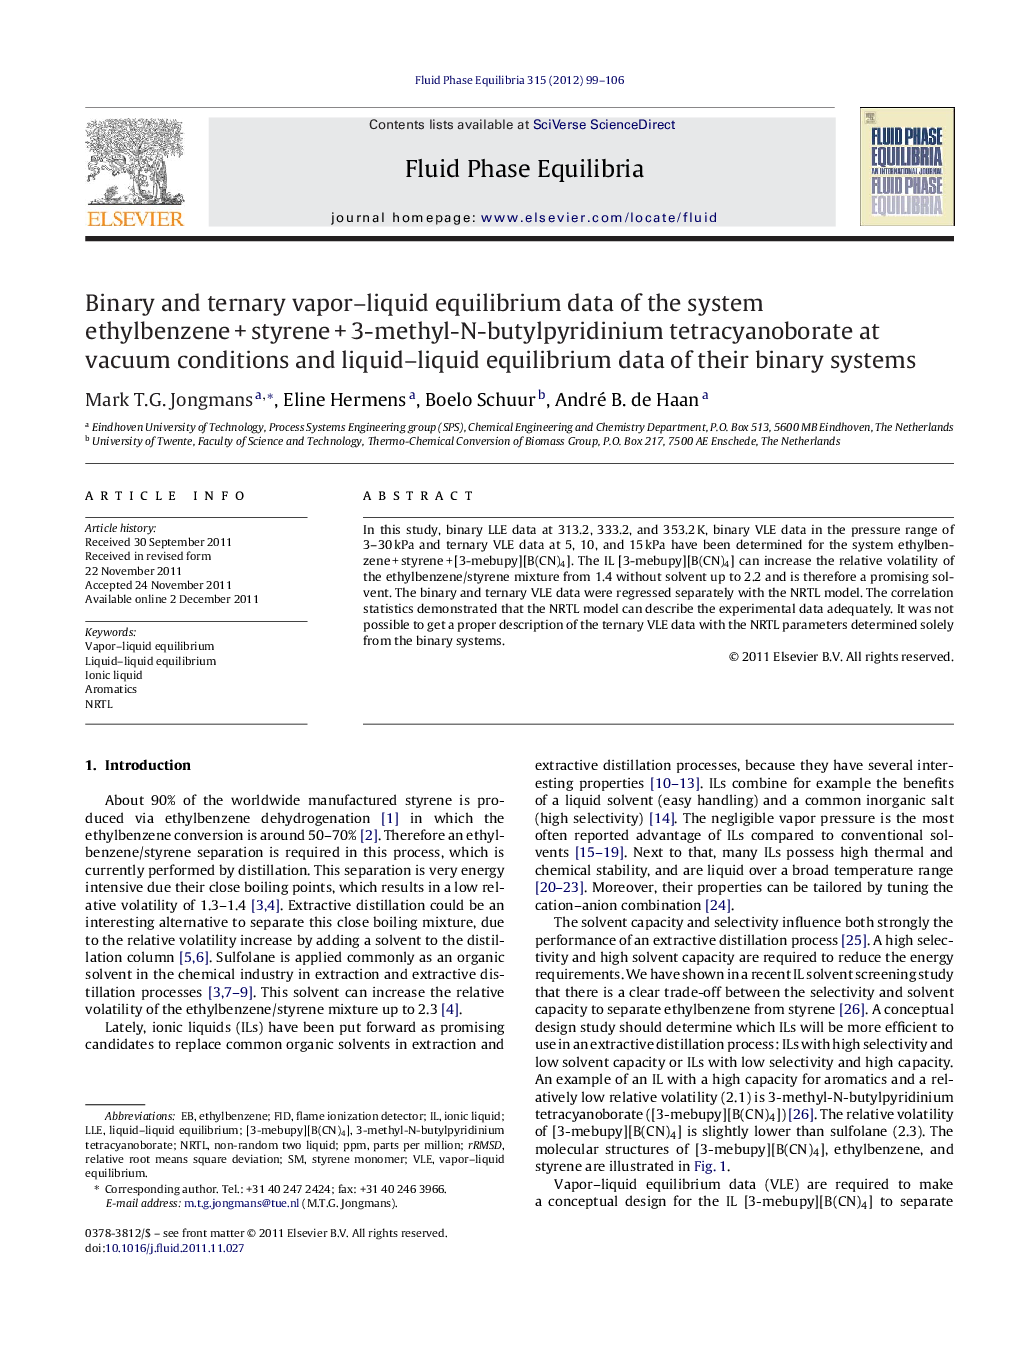 Binary and ternary vapor–liquid equilibrium data of the system ethylbenzene + styrene + 3-methyl-N-butylpyridinium tetracyanoborate at vacuum conditions and liquid–liquid equilibrium data of their binary systems